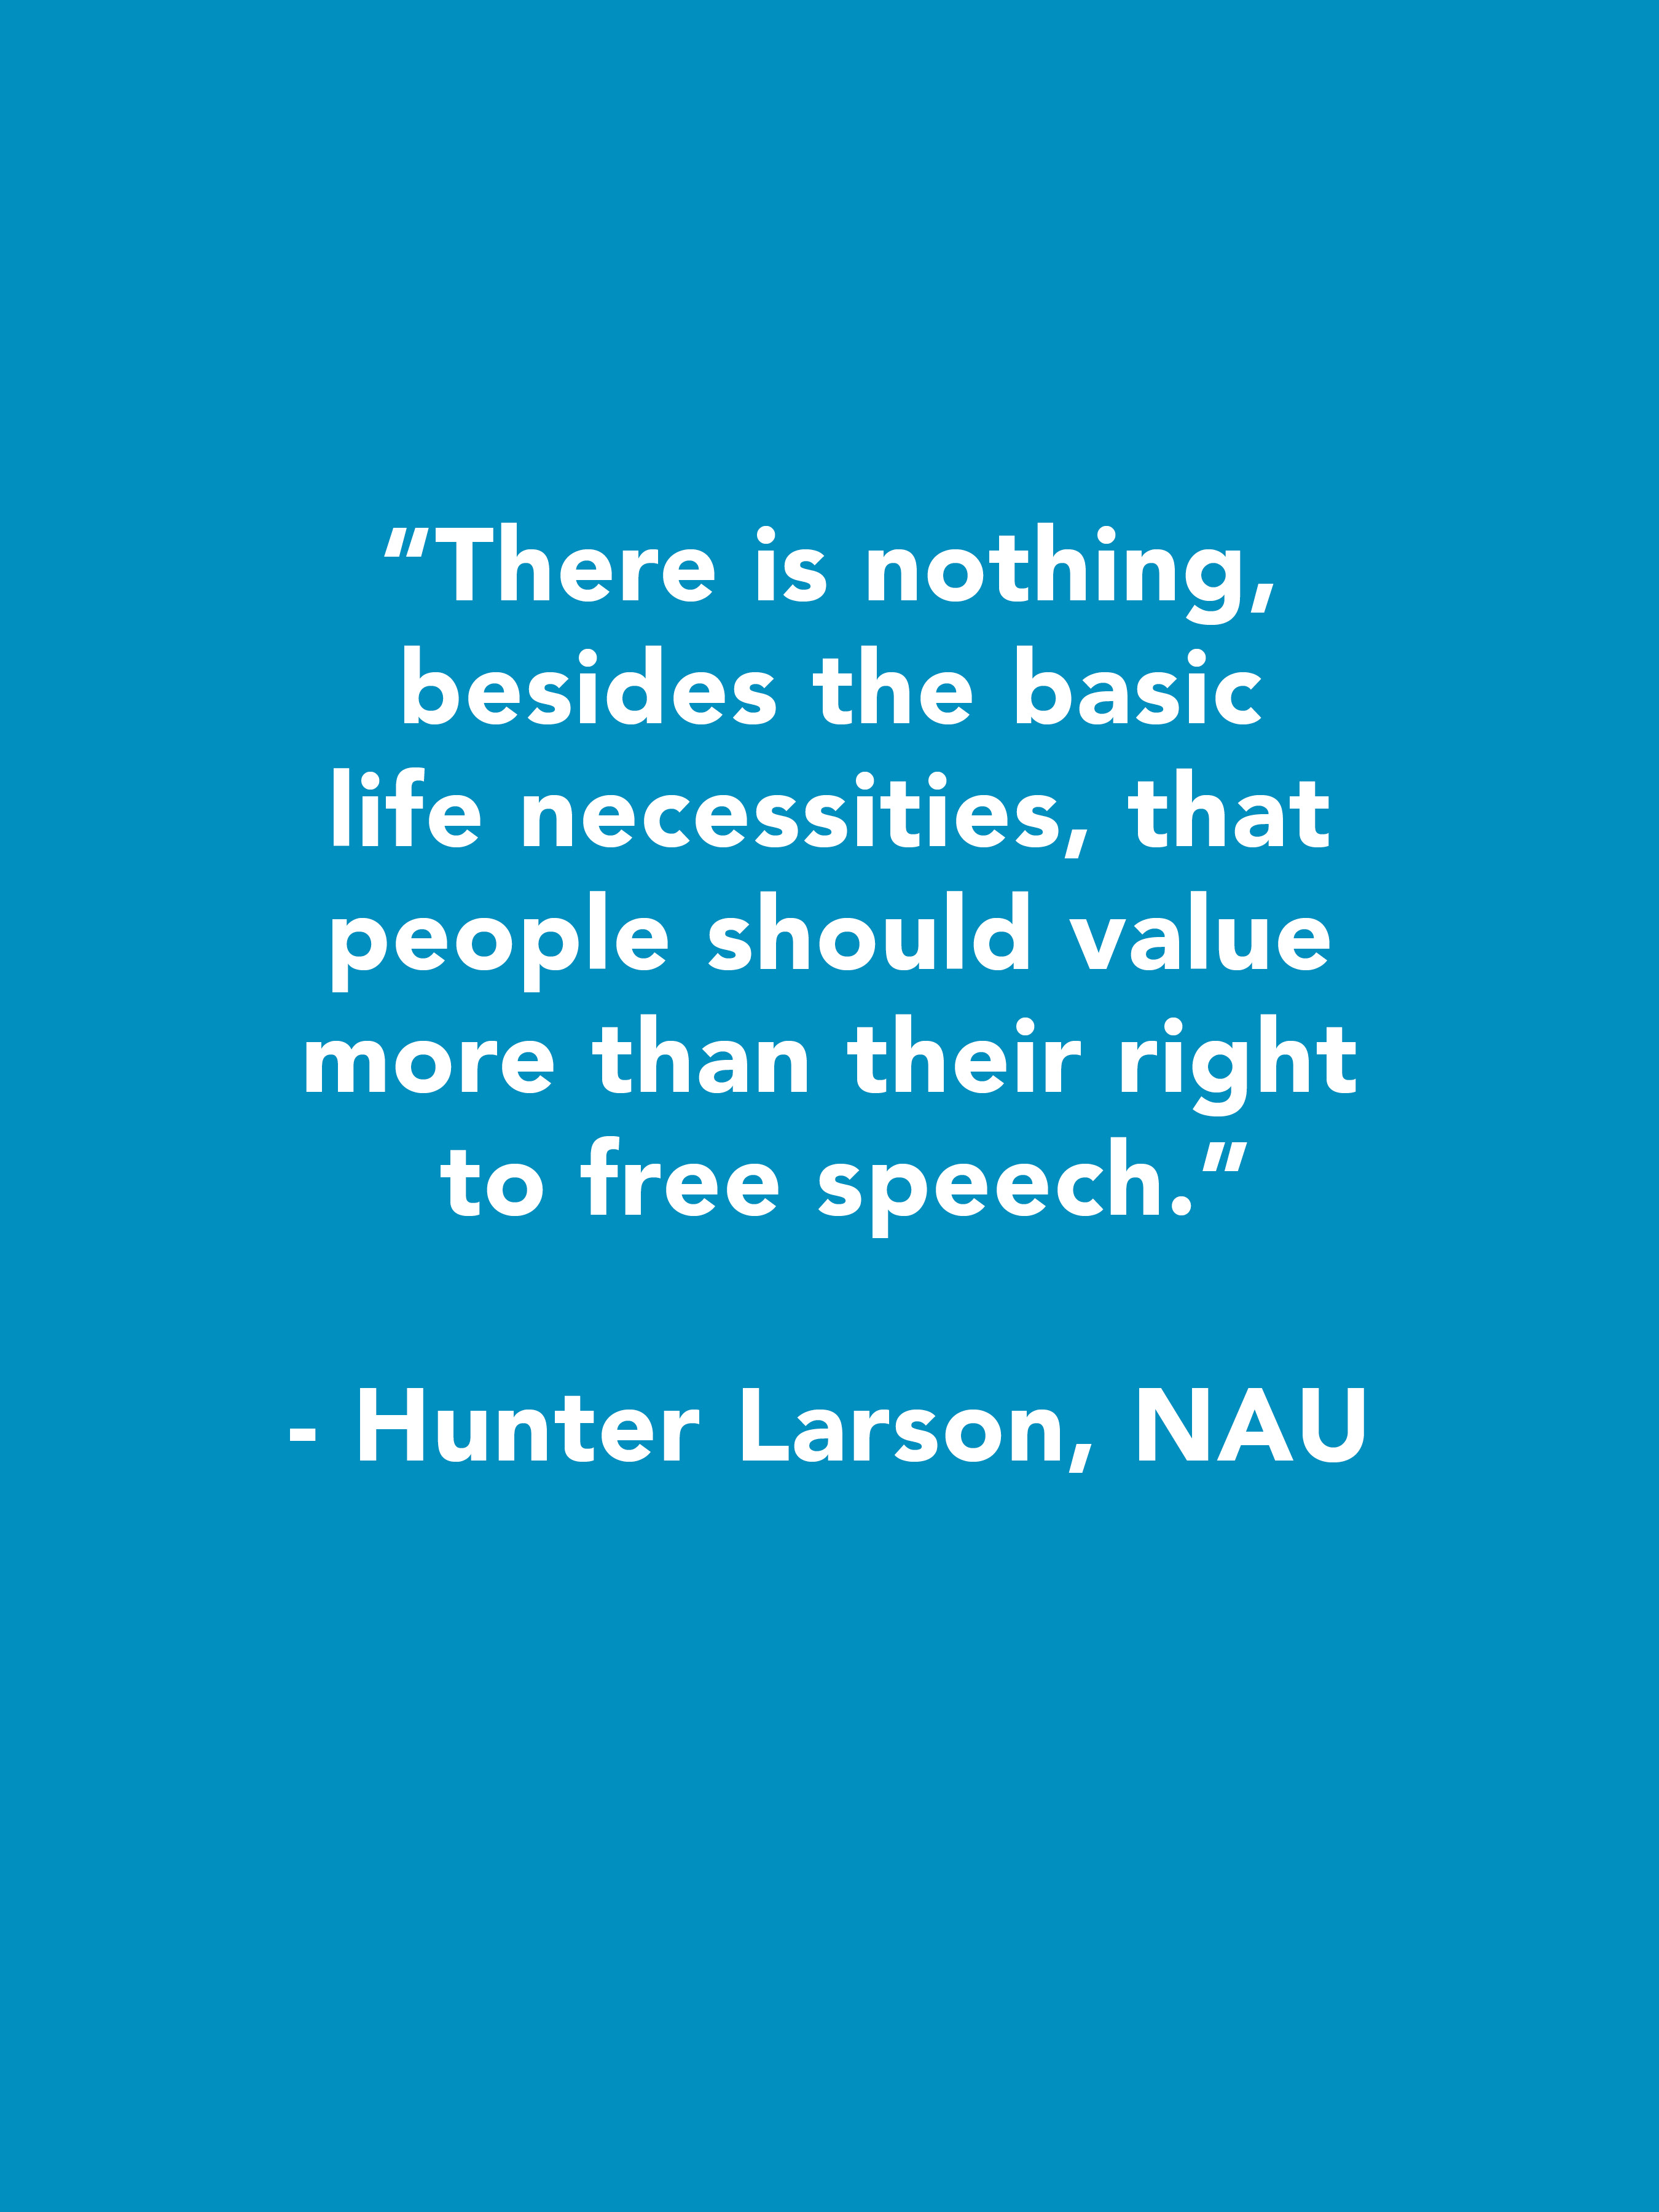 Hunter Larson Quote, NAU -blue